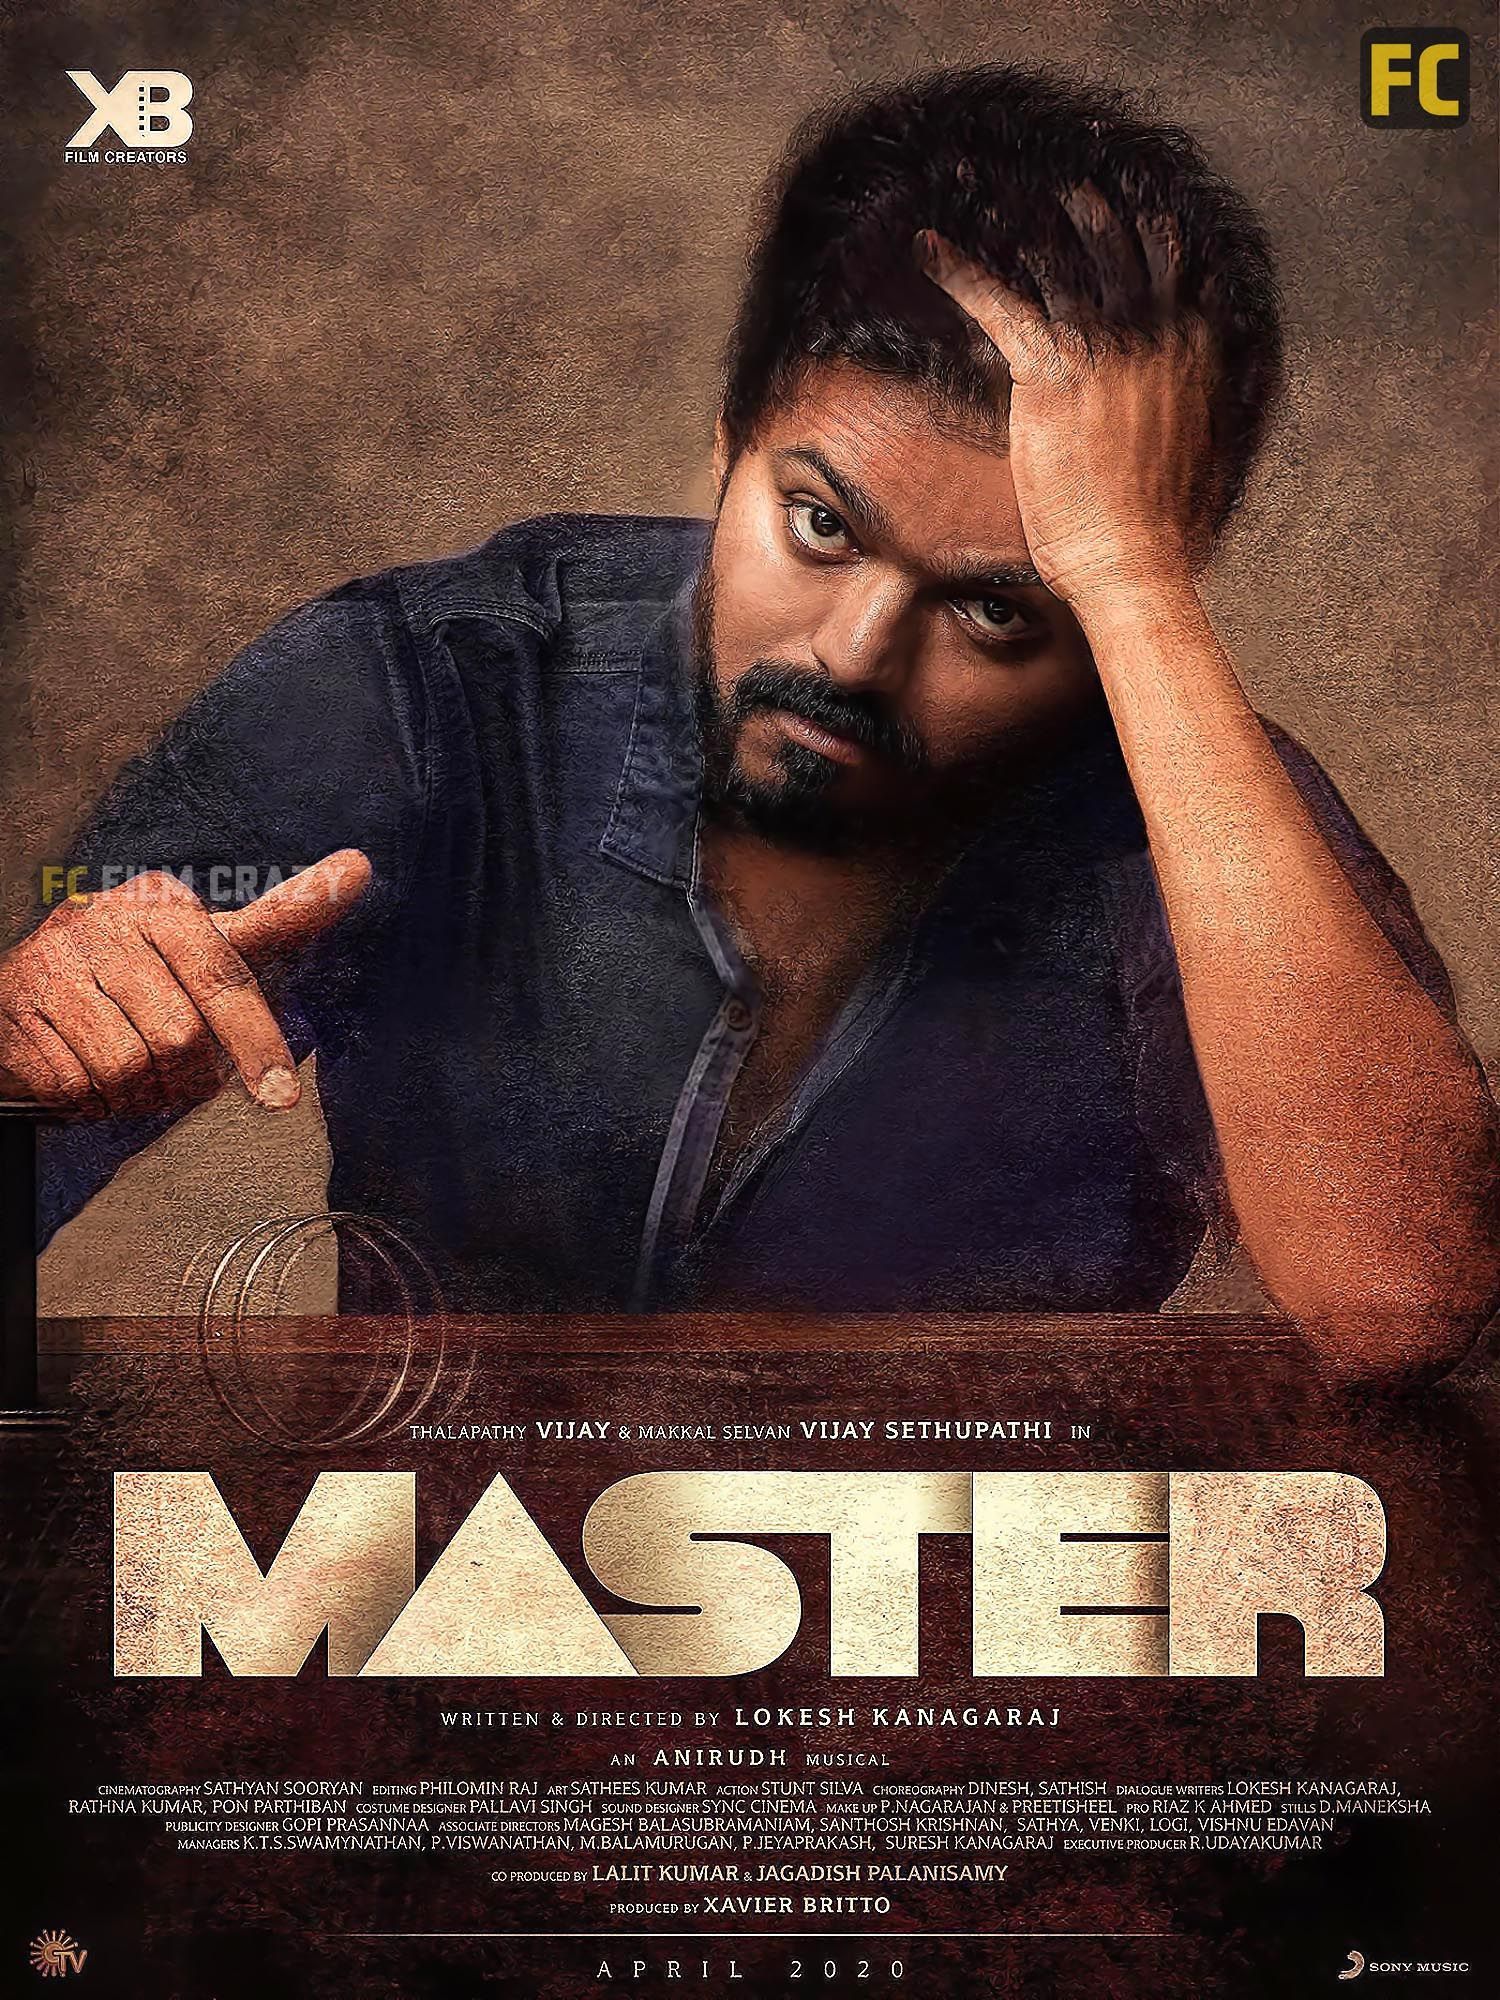 vijay the master movie review